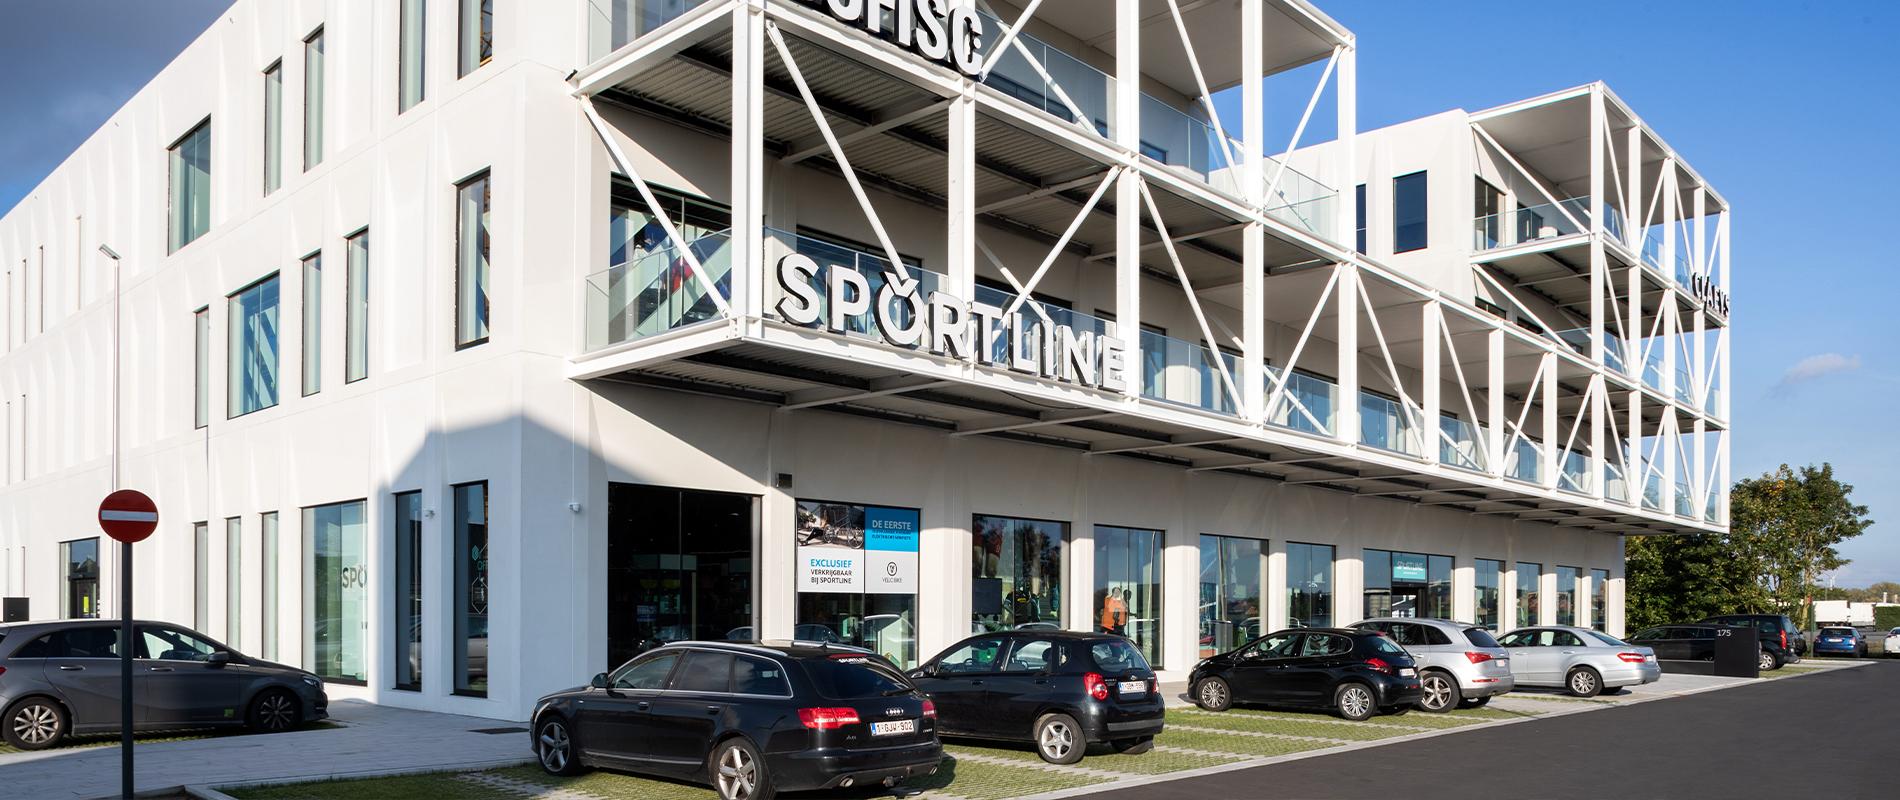 Sportfashion: Sportline, Roeselare België